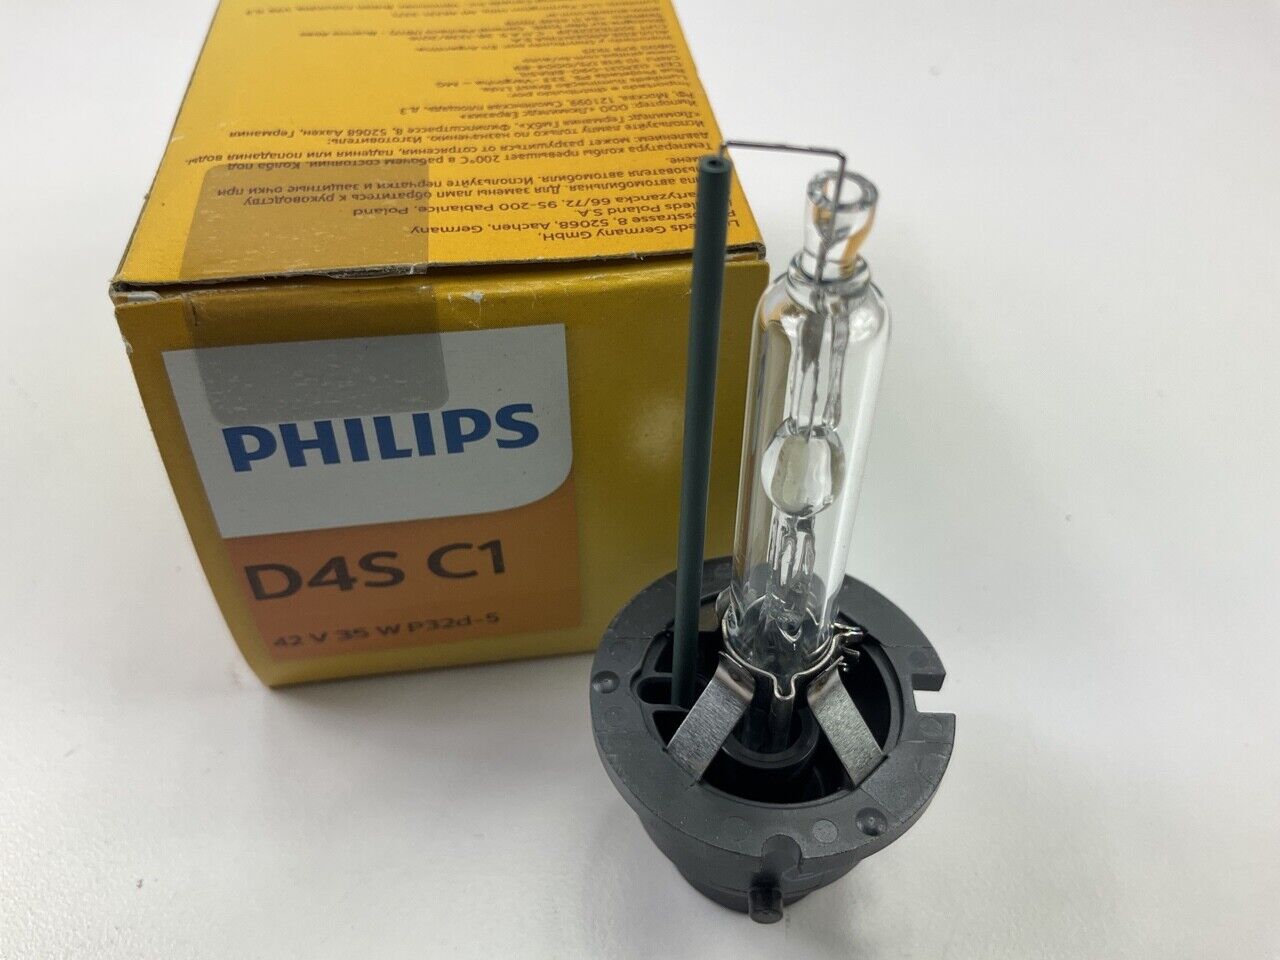 Philips D4SC1 HID Headlight Light Bulb # D4S